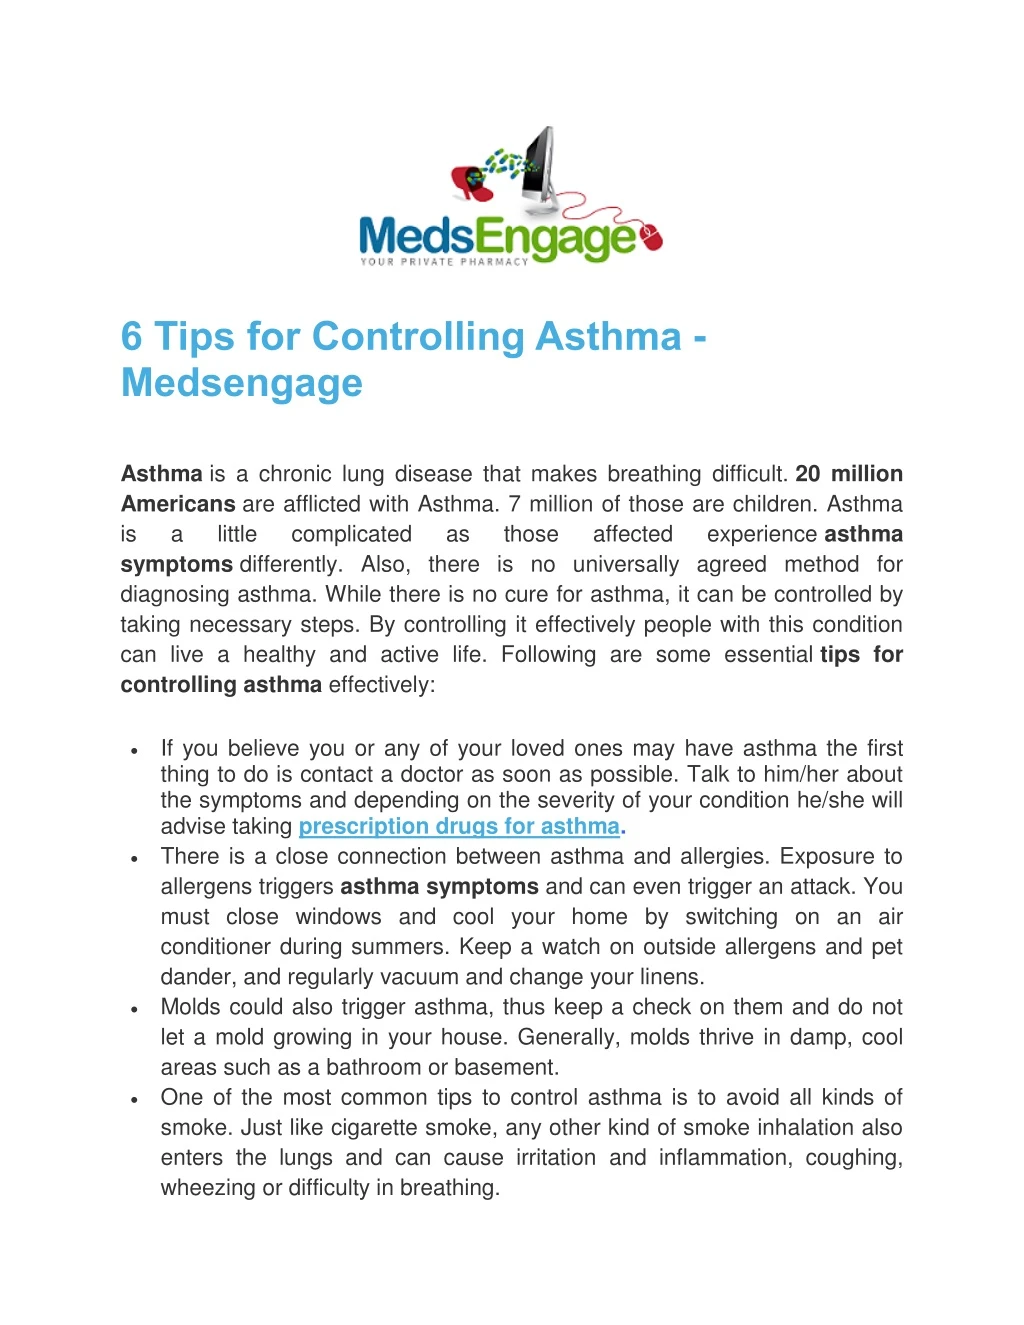 6 tips for controlling asthma medsengage